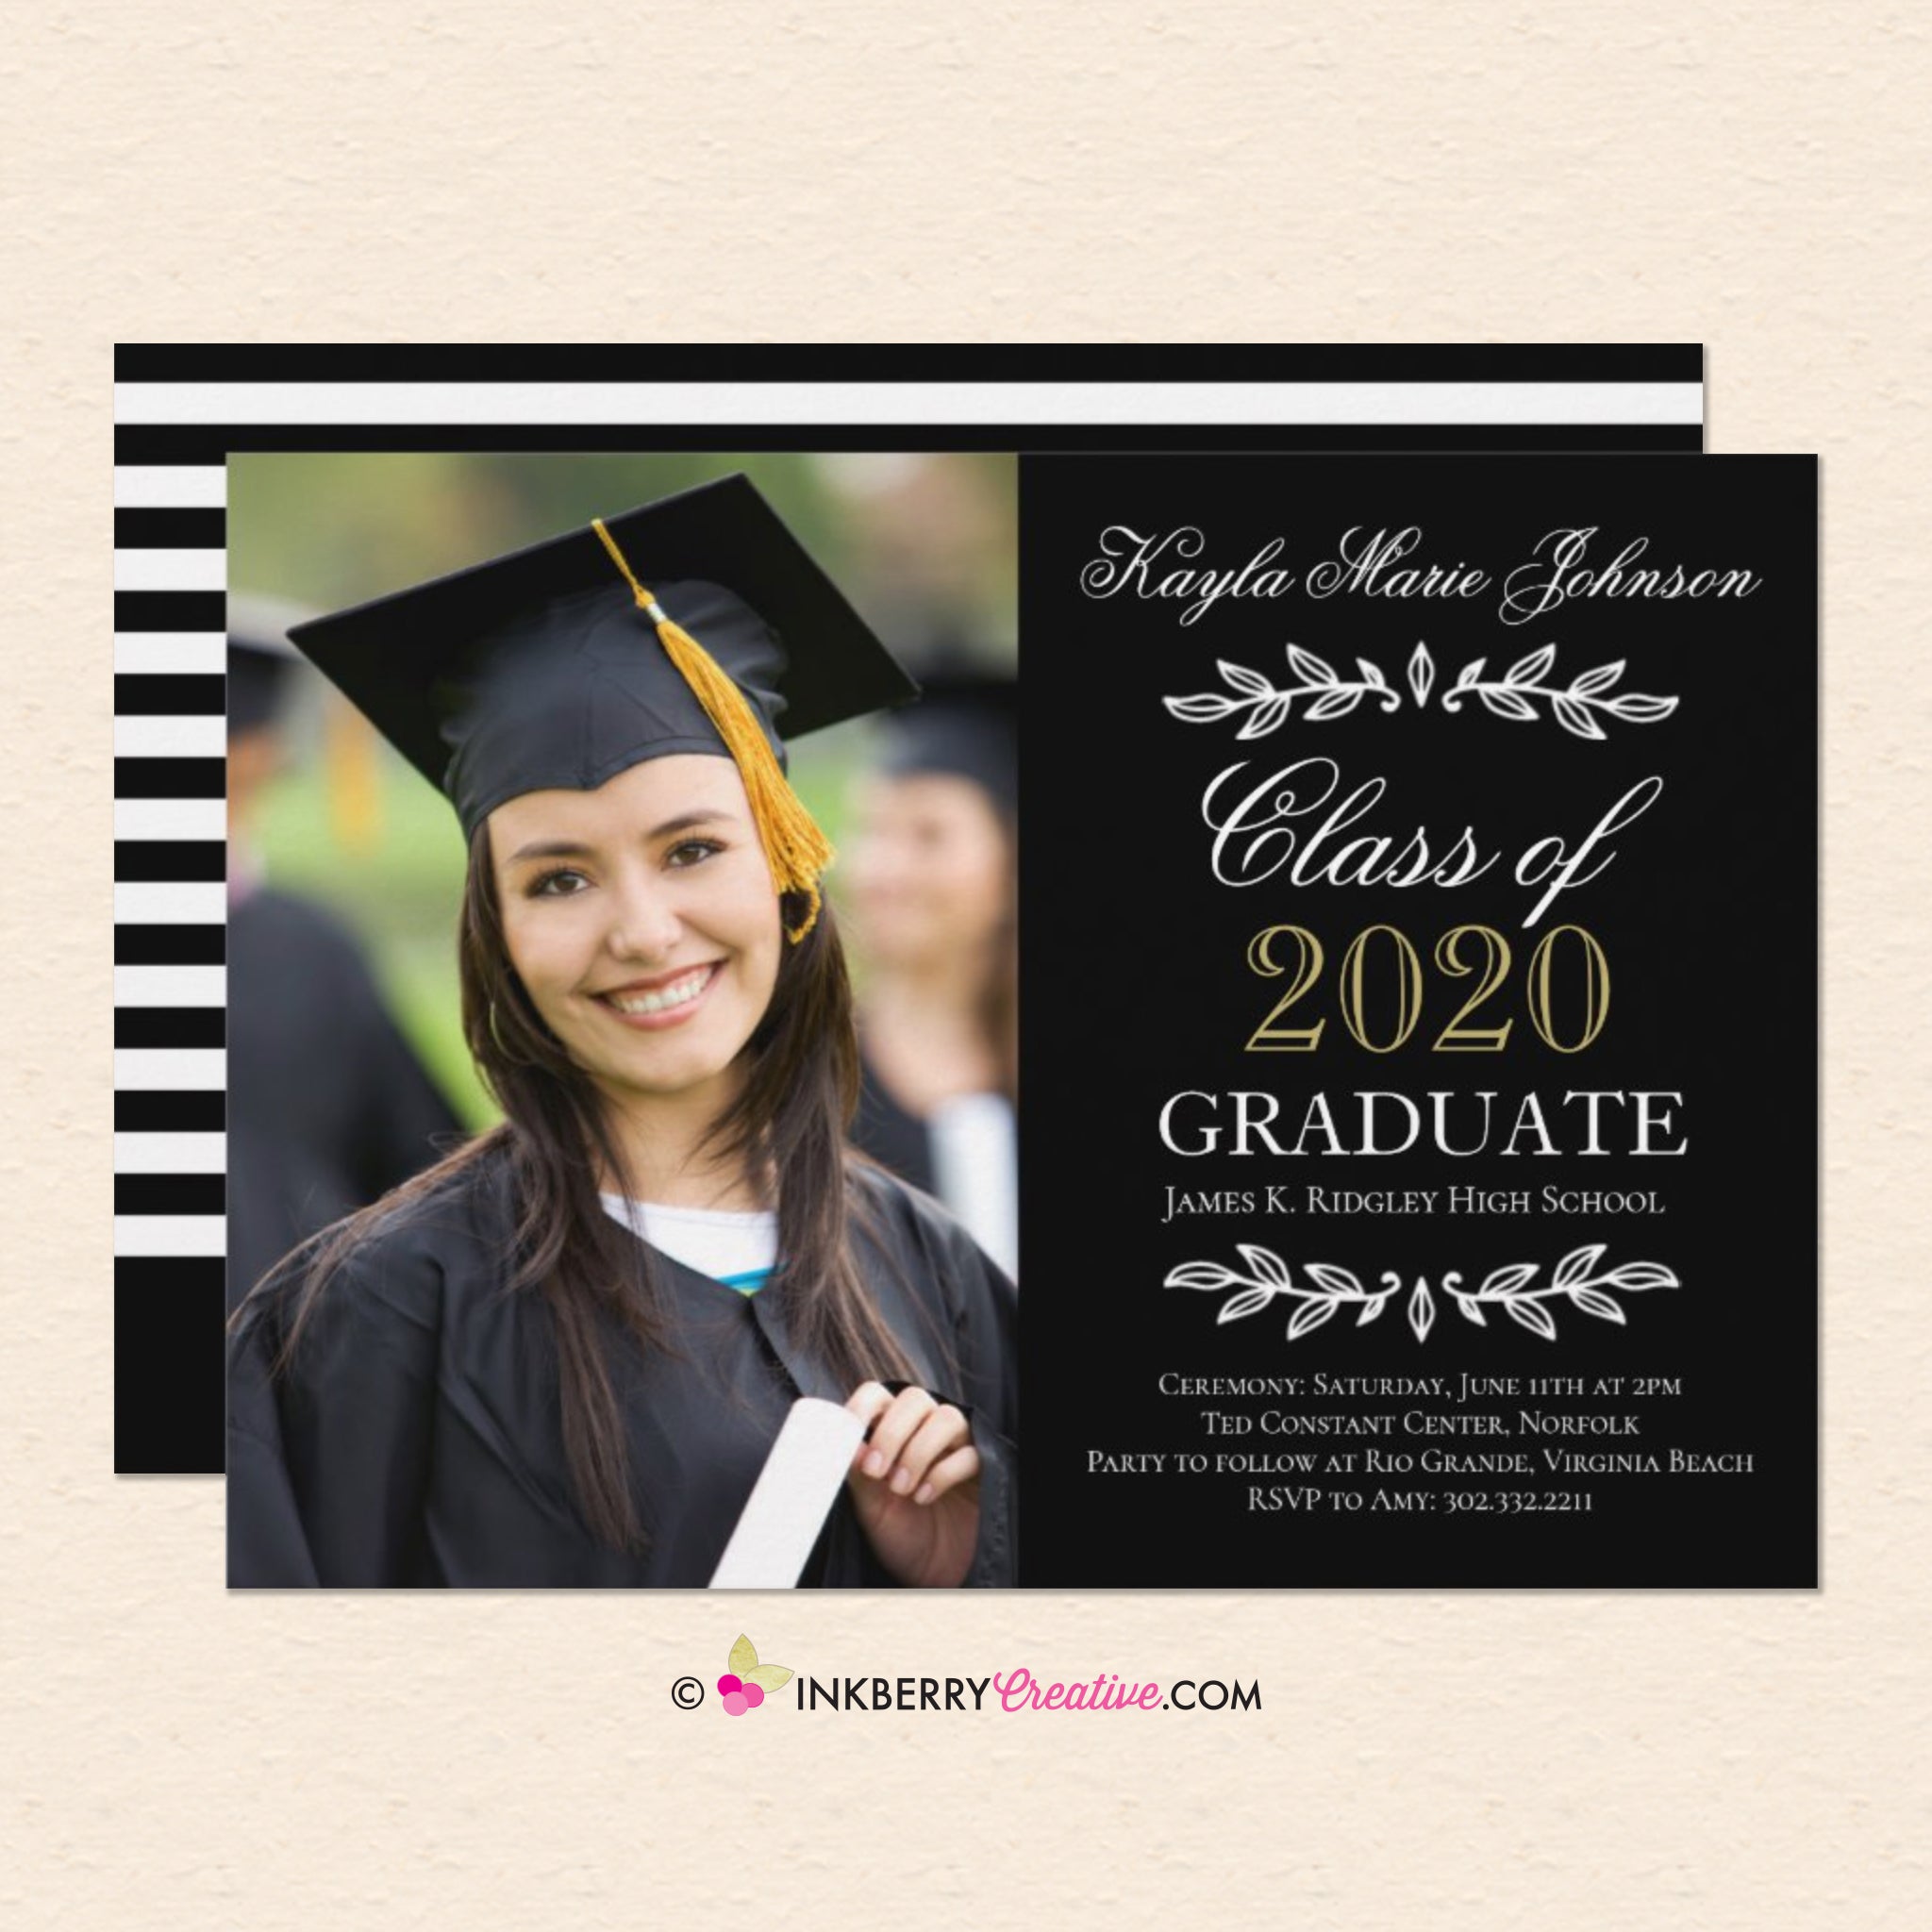 Elegant Script and Leaves - Graduation Invitation or Announcement – Inkberry Creative, Inc.